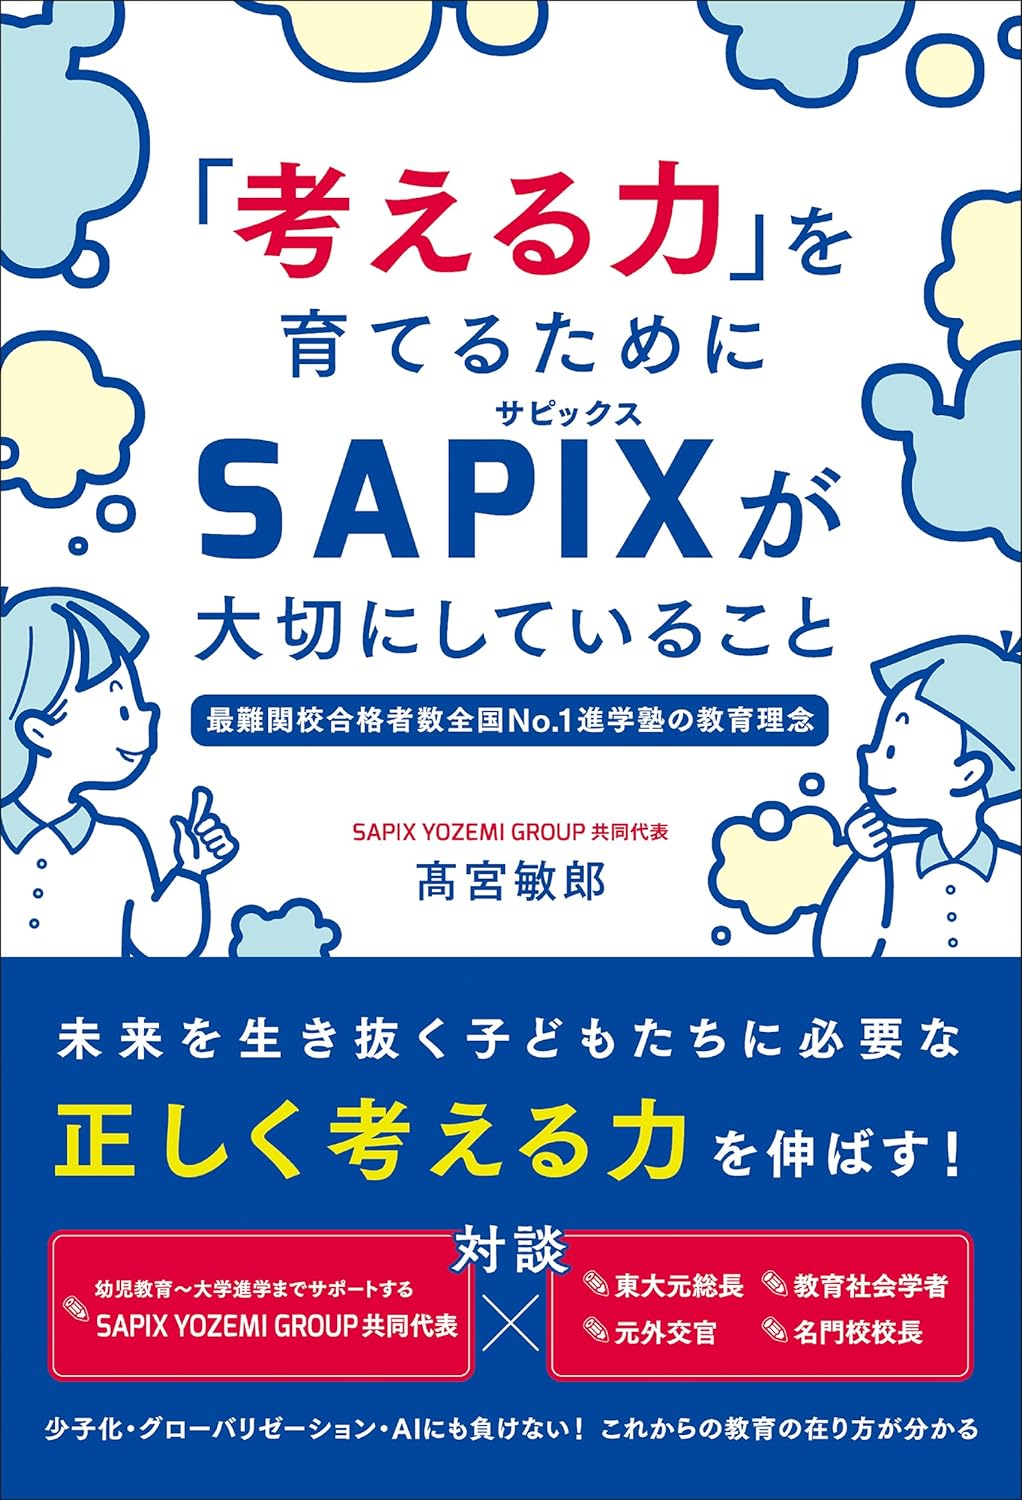 SAPIX YOZEMI GROUP 共同代表 高宮 敏太 先生の著書が刊行されました